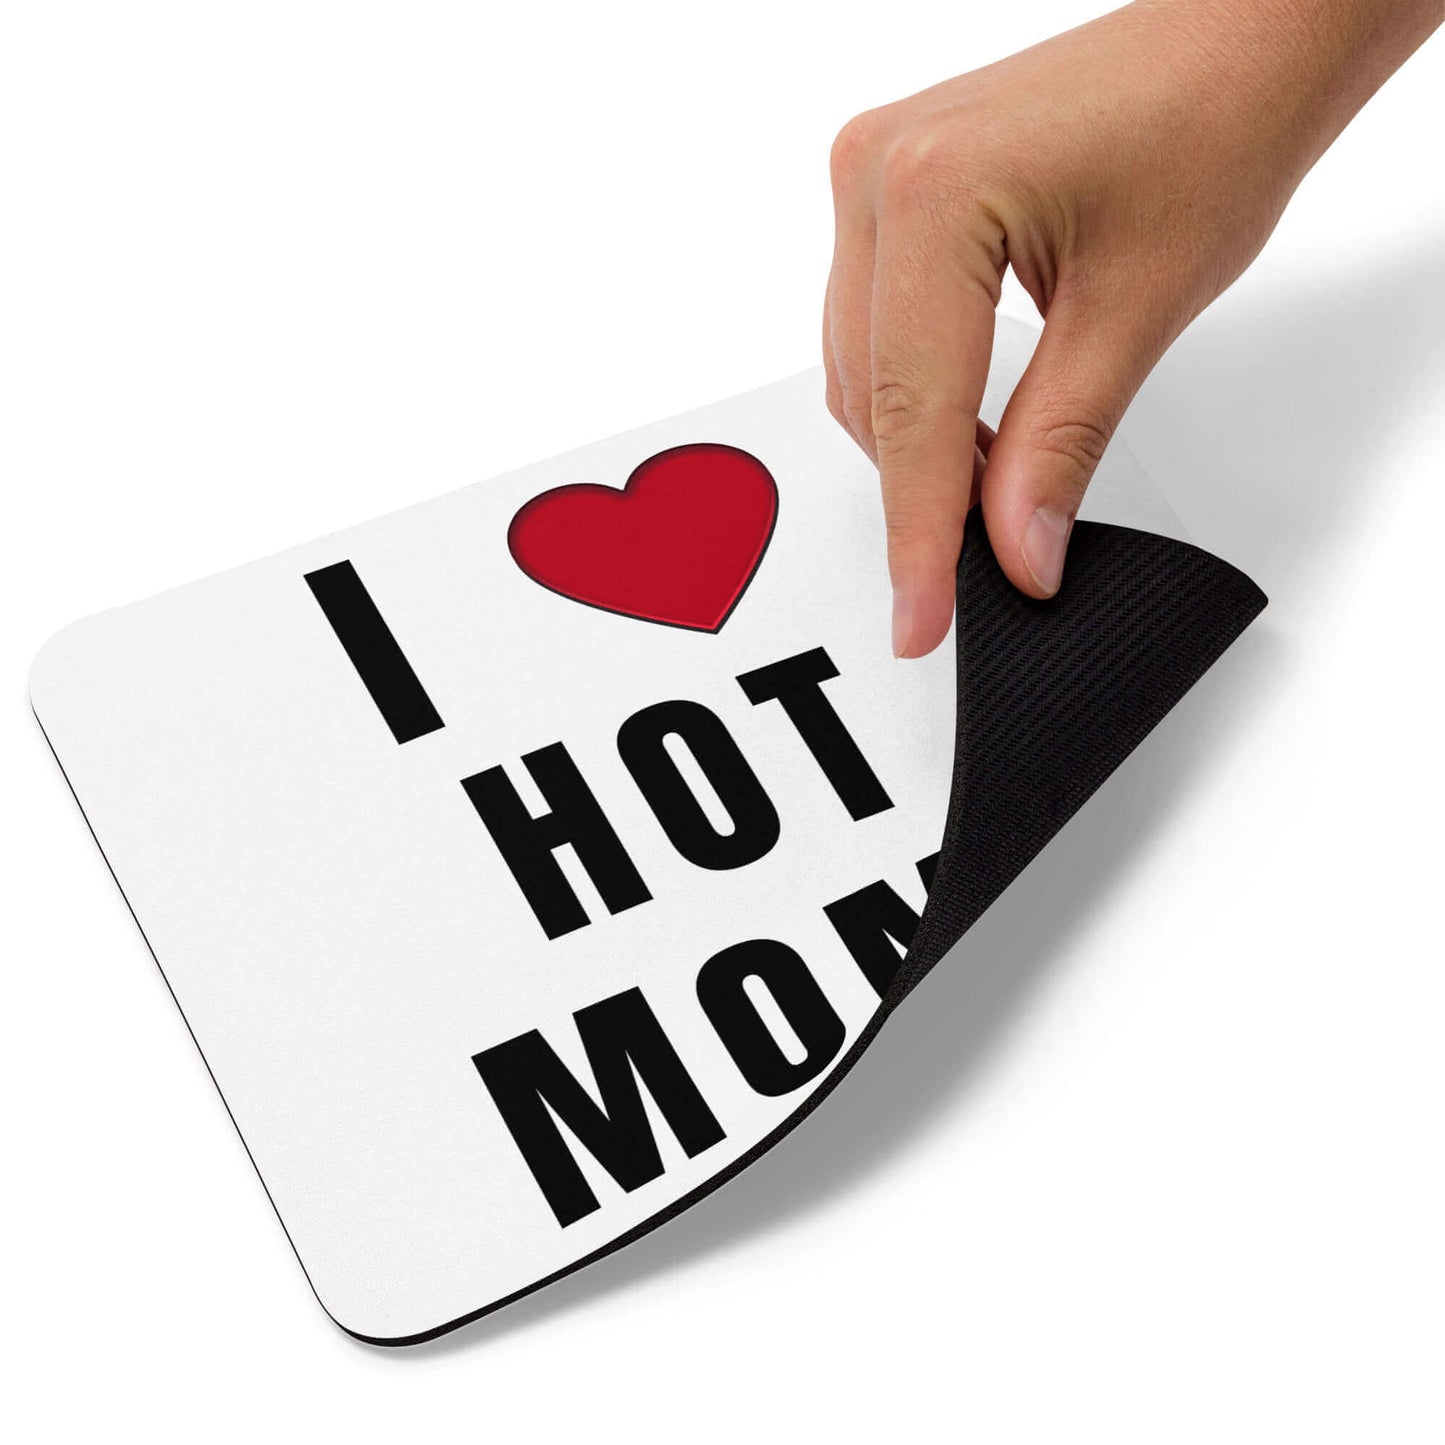 I love HOT Moms - Mouse pad Hot Mamma Hot Moms I heart hot moms I love hot moms M.I.L.F MILF Mothers Day